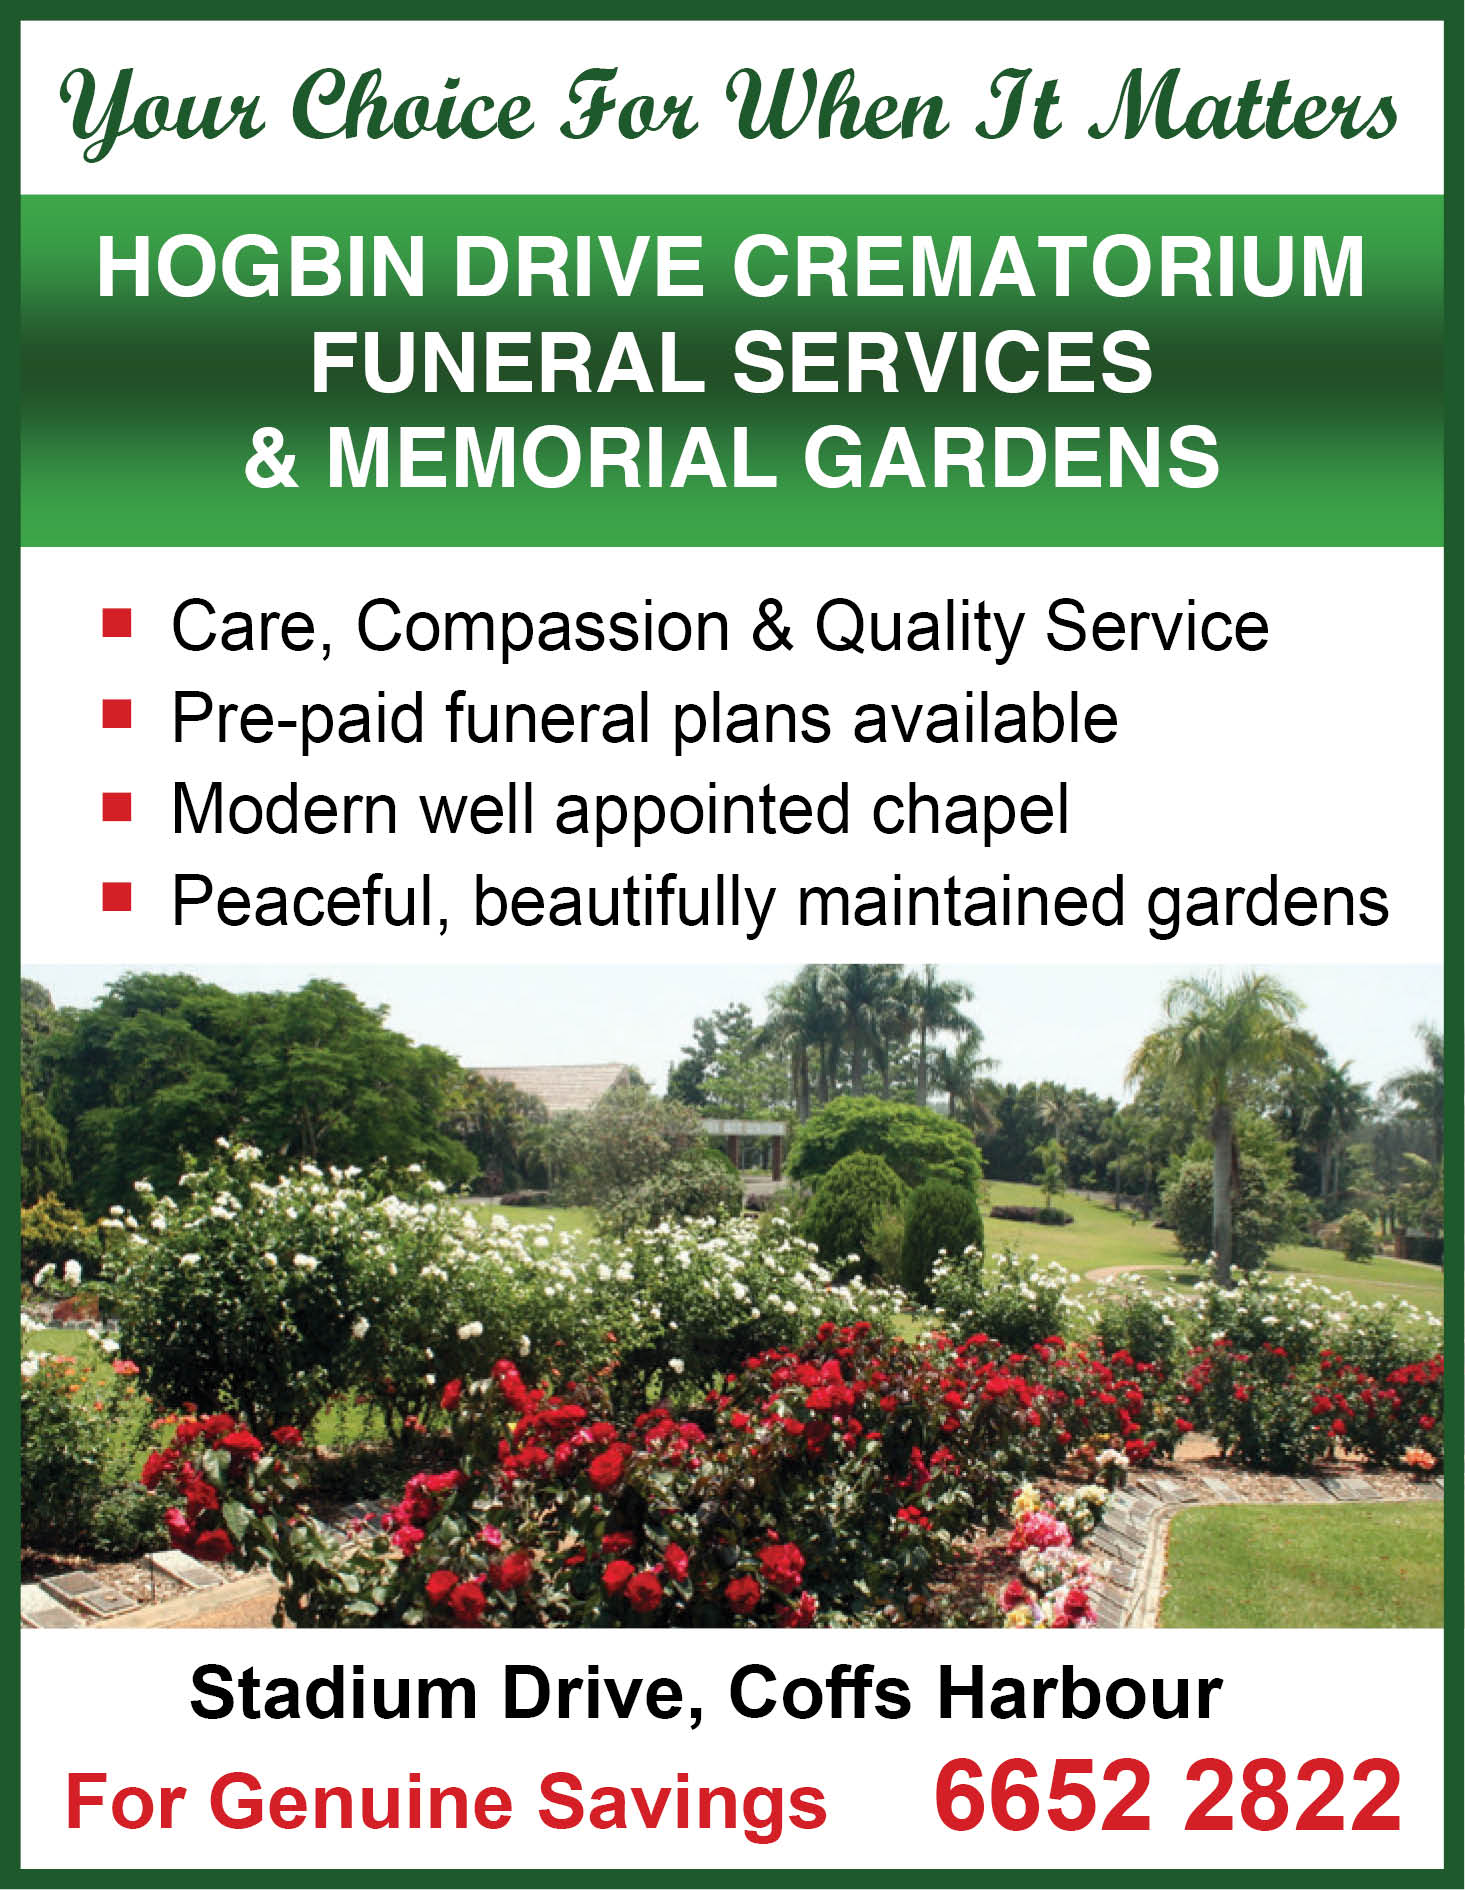 Keith Logue (Hogbin Drive Crematorium)